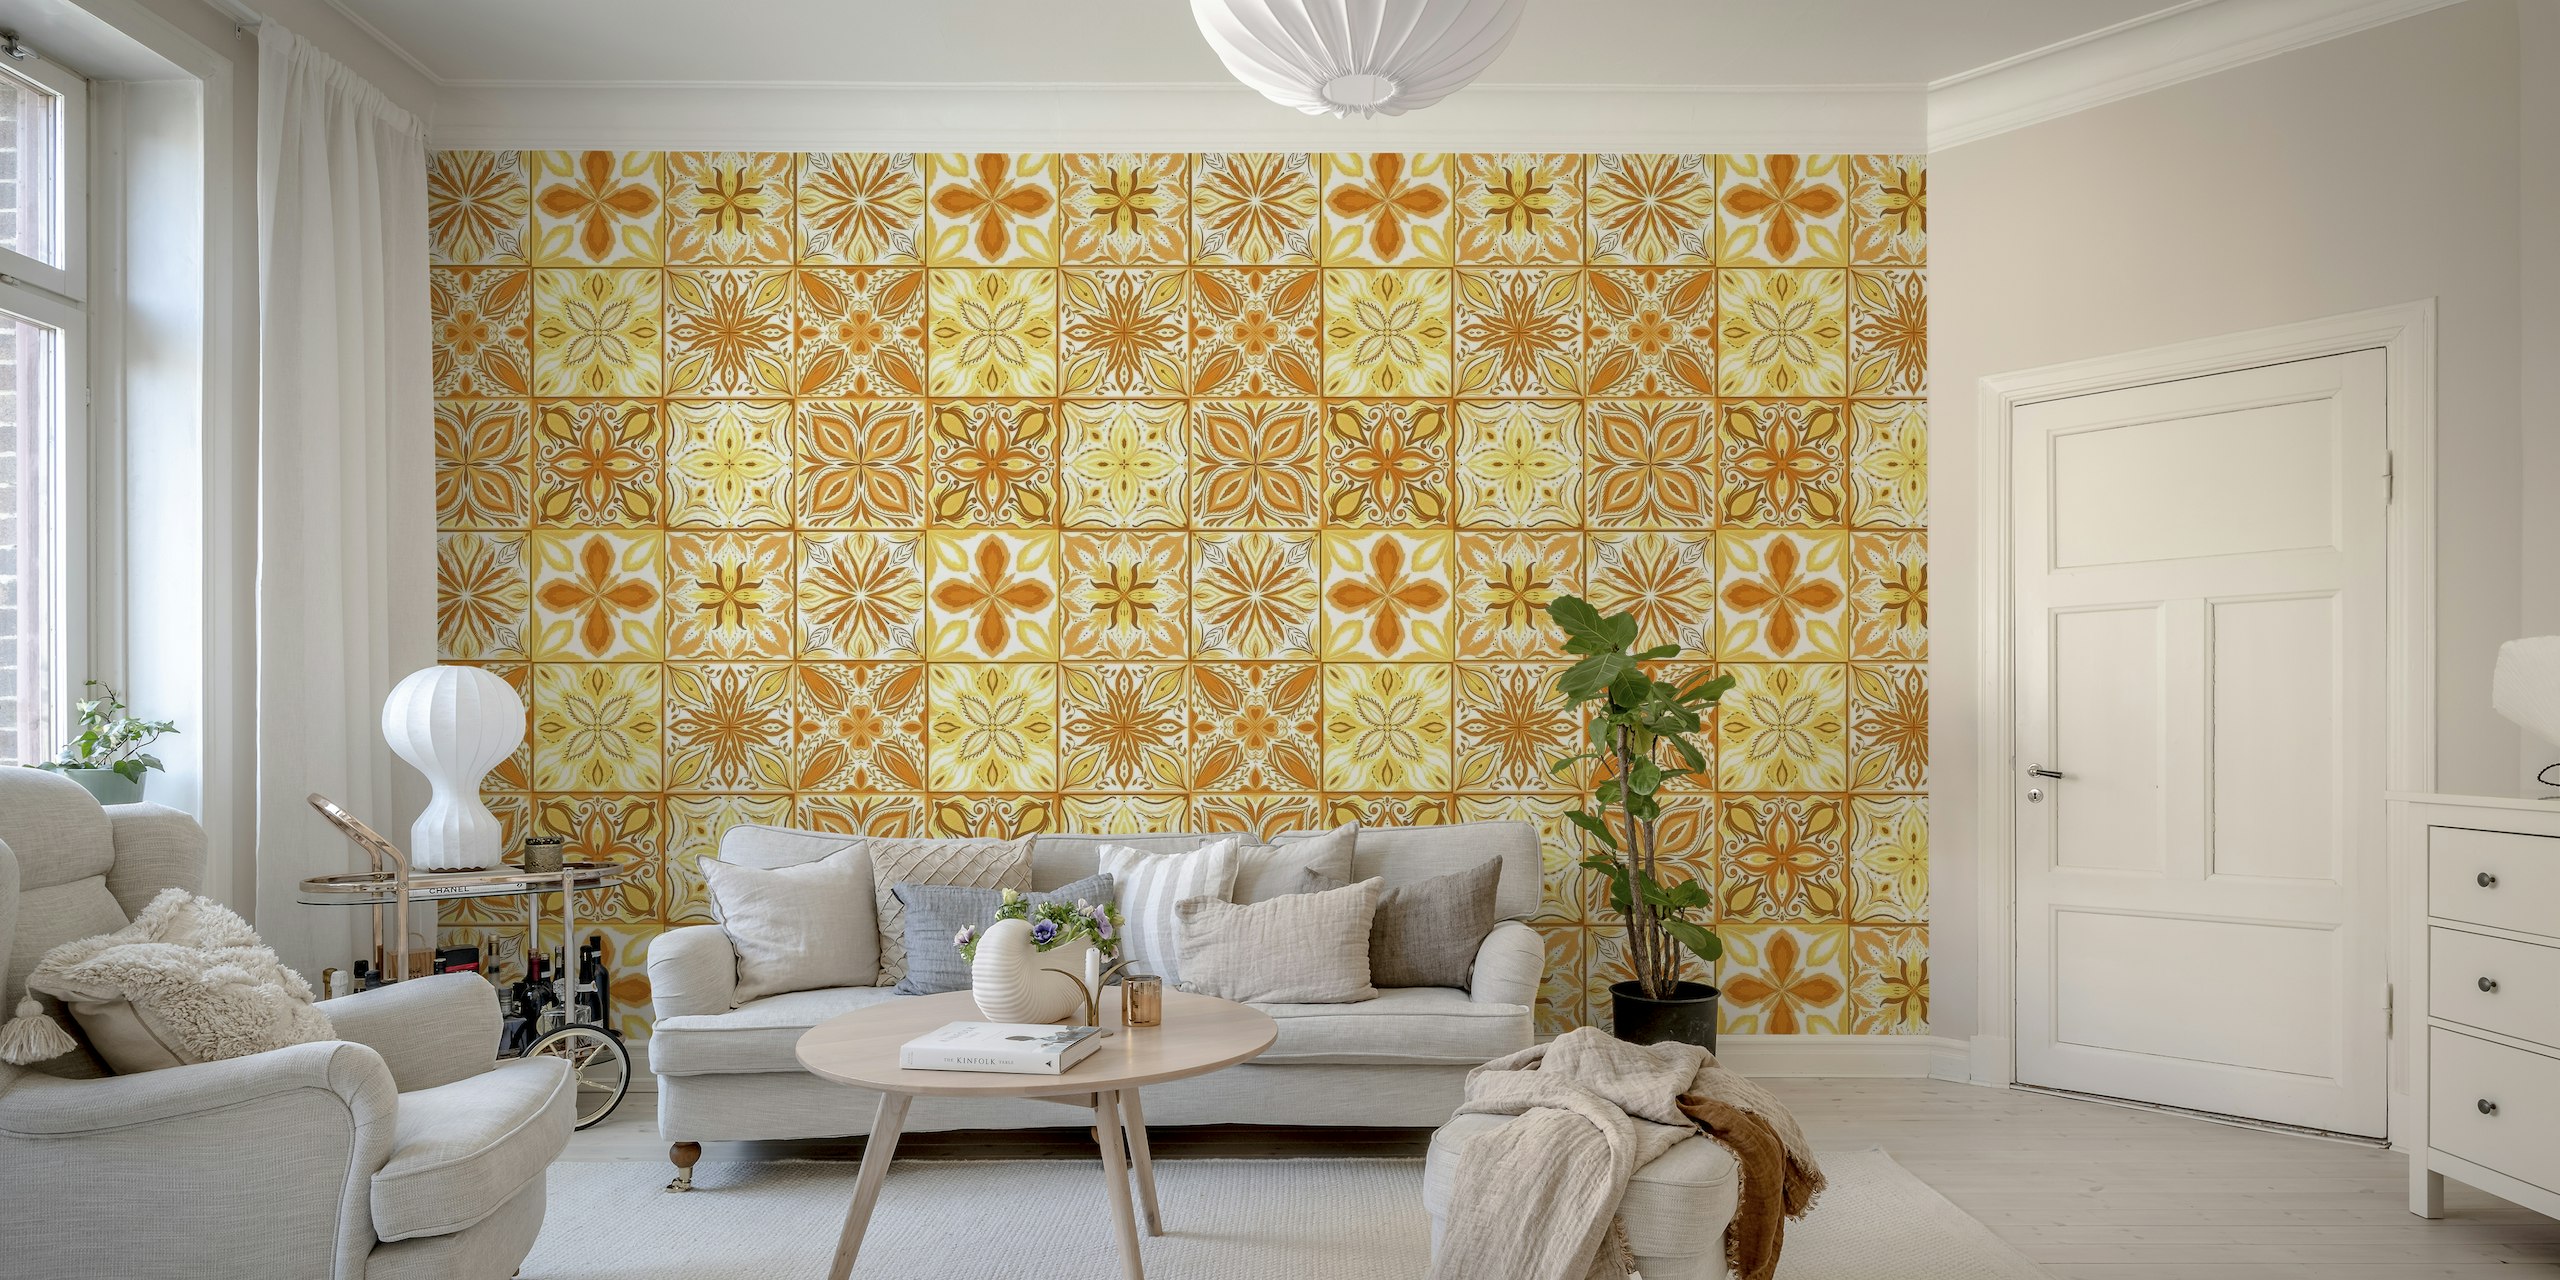 Ornate tiles in orange and yellow tapeta